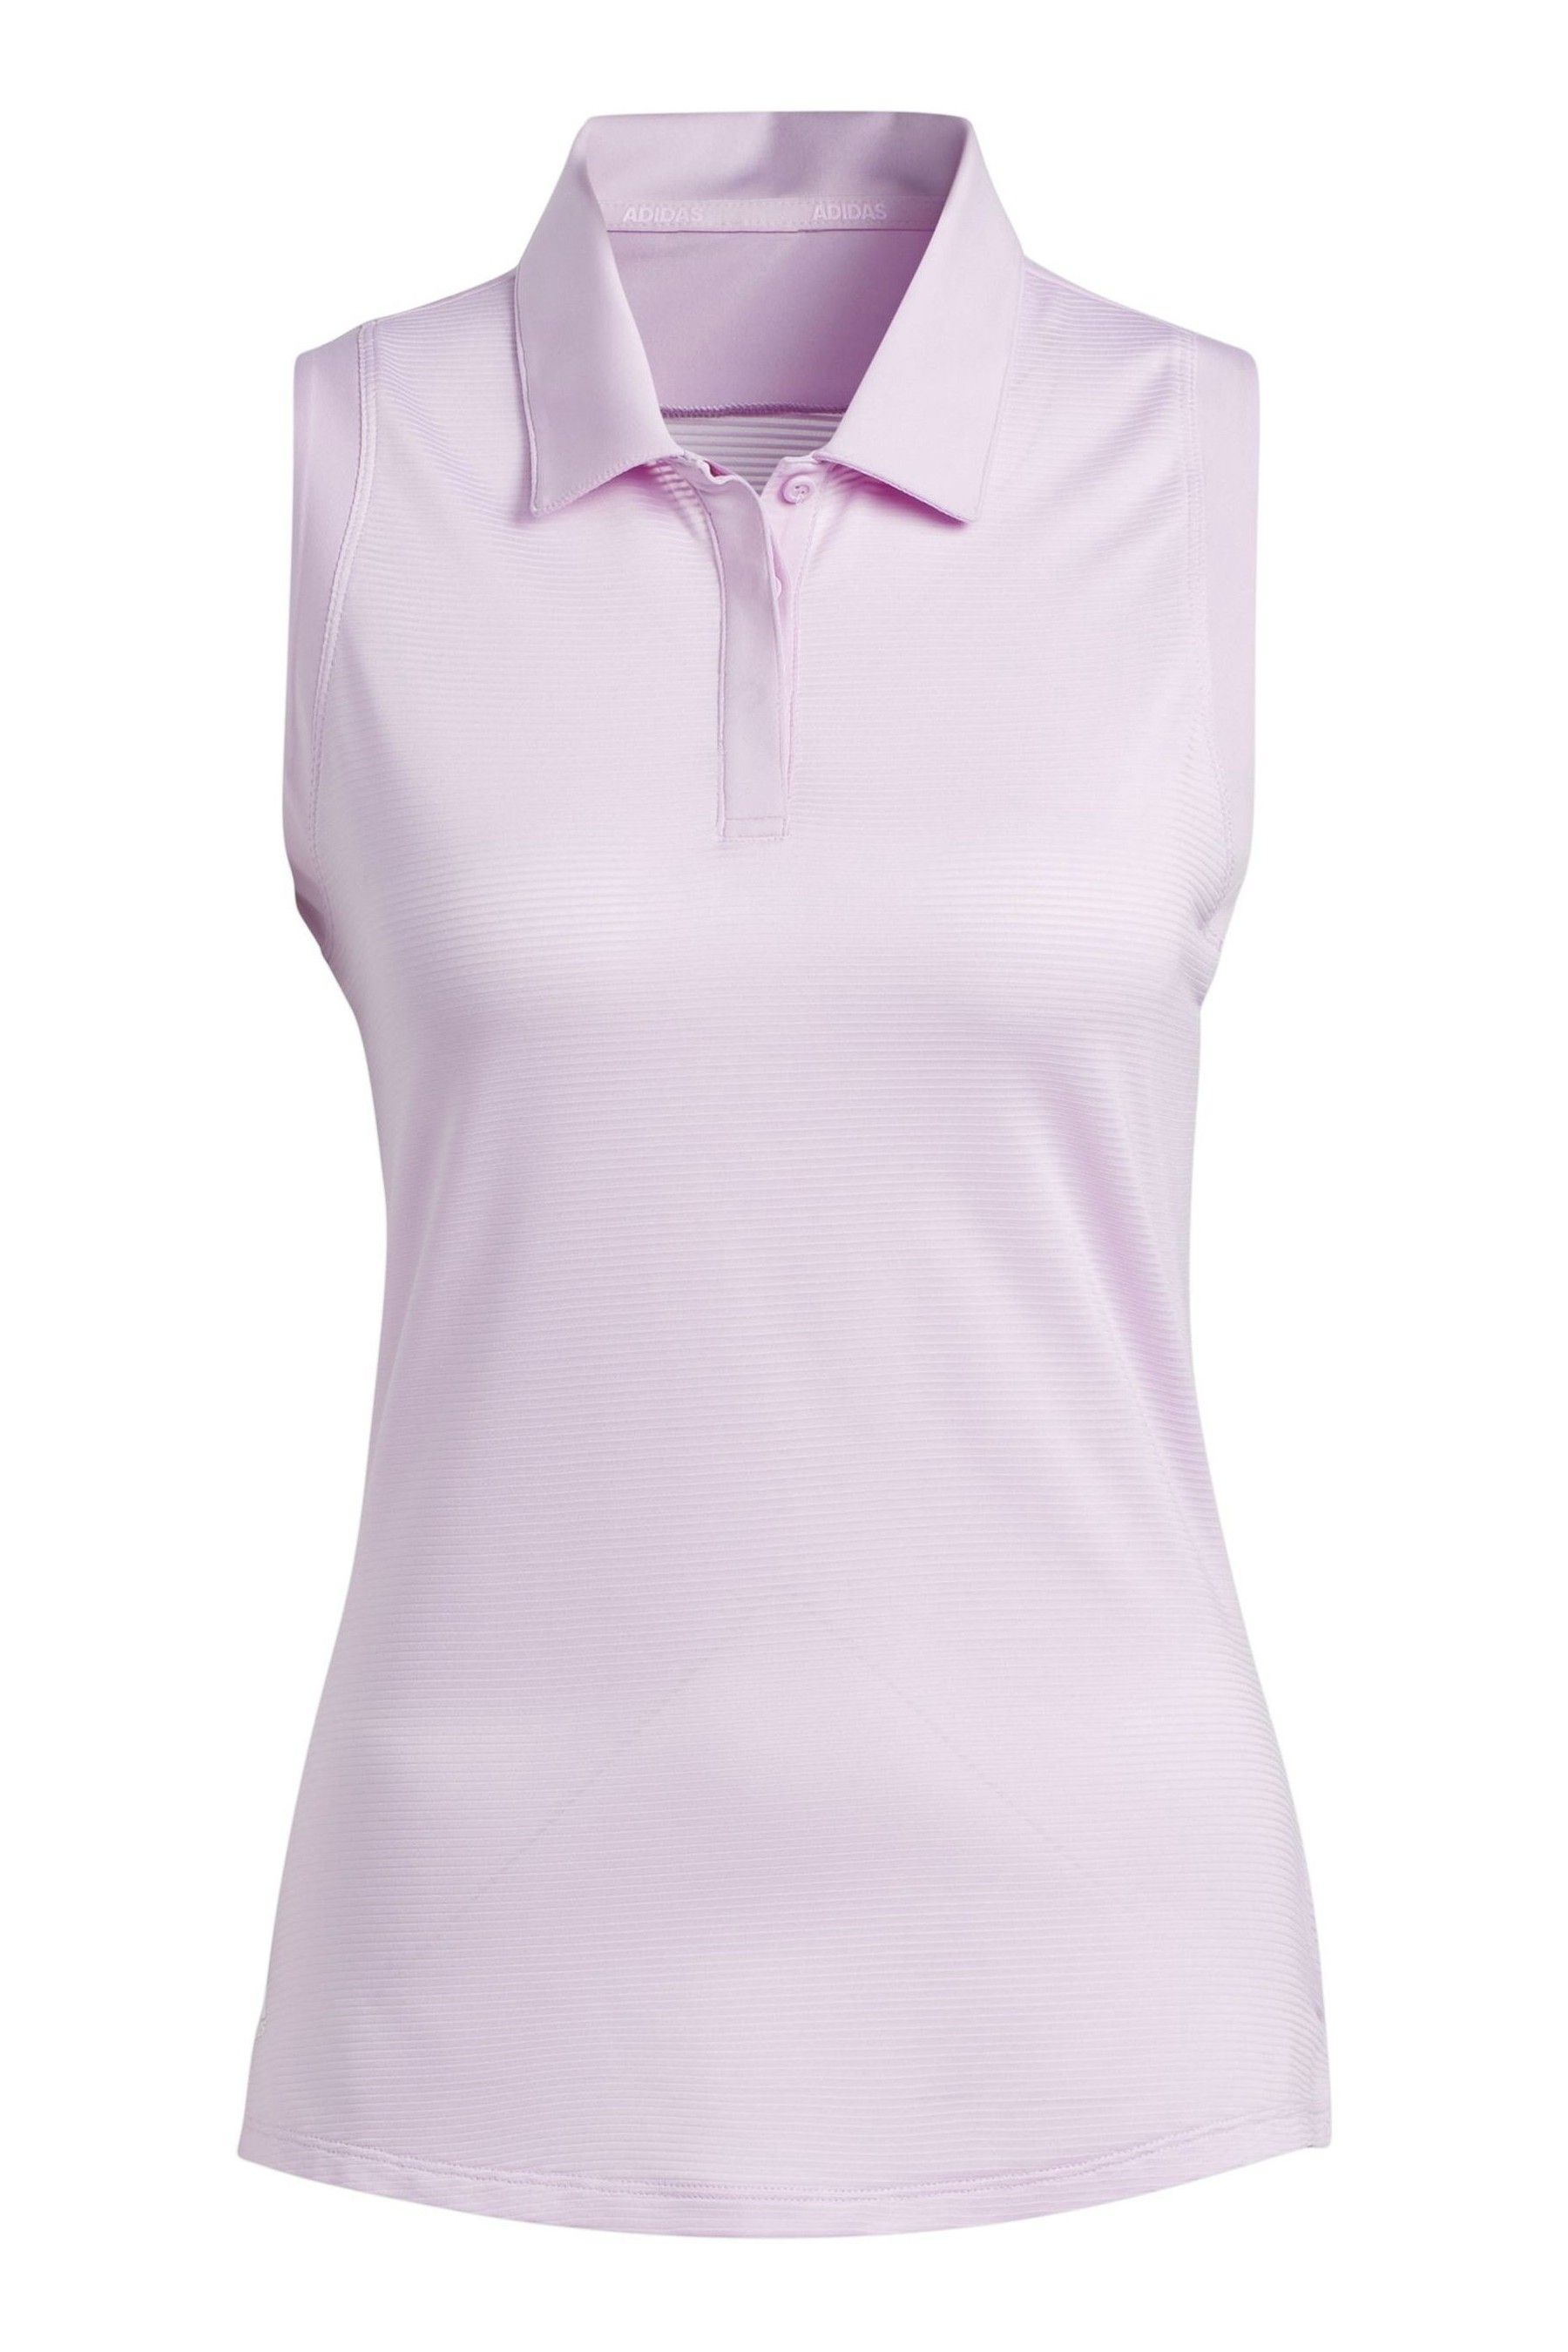 Buy adidas Golf Purple Sleeveless Polo Shirt from the Next UK online shop